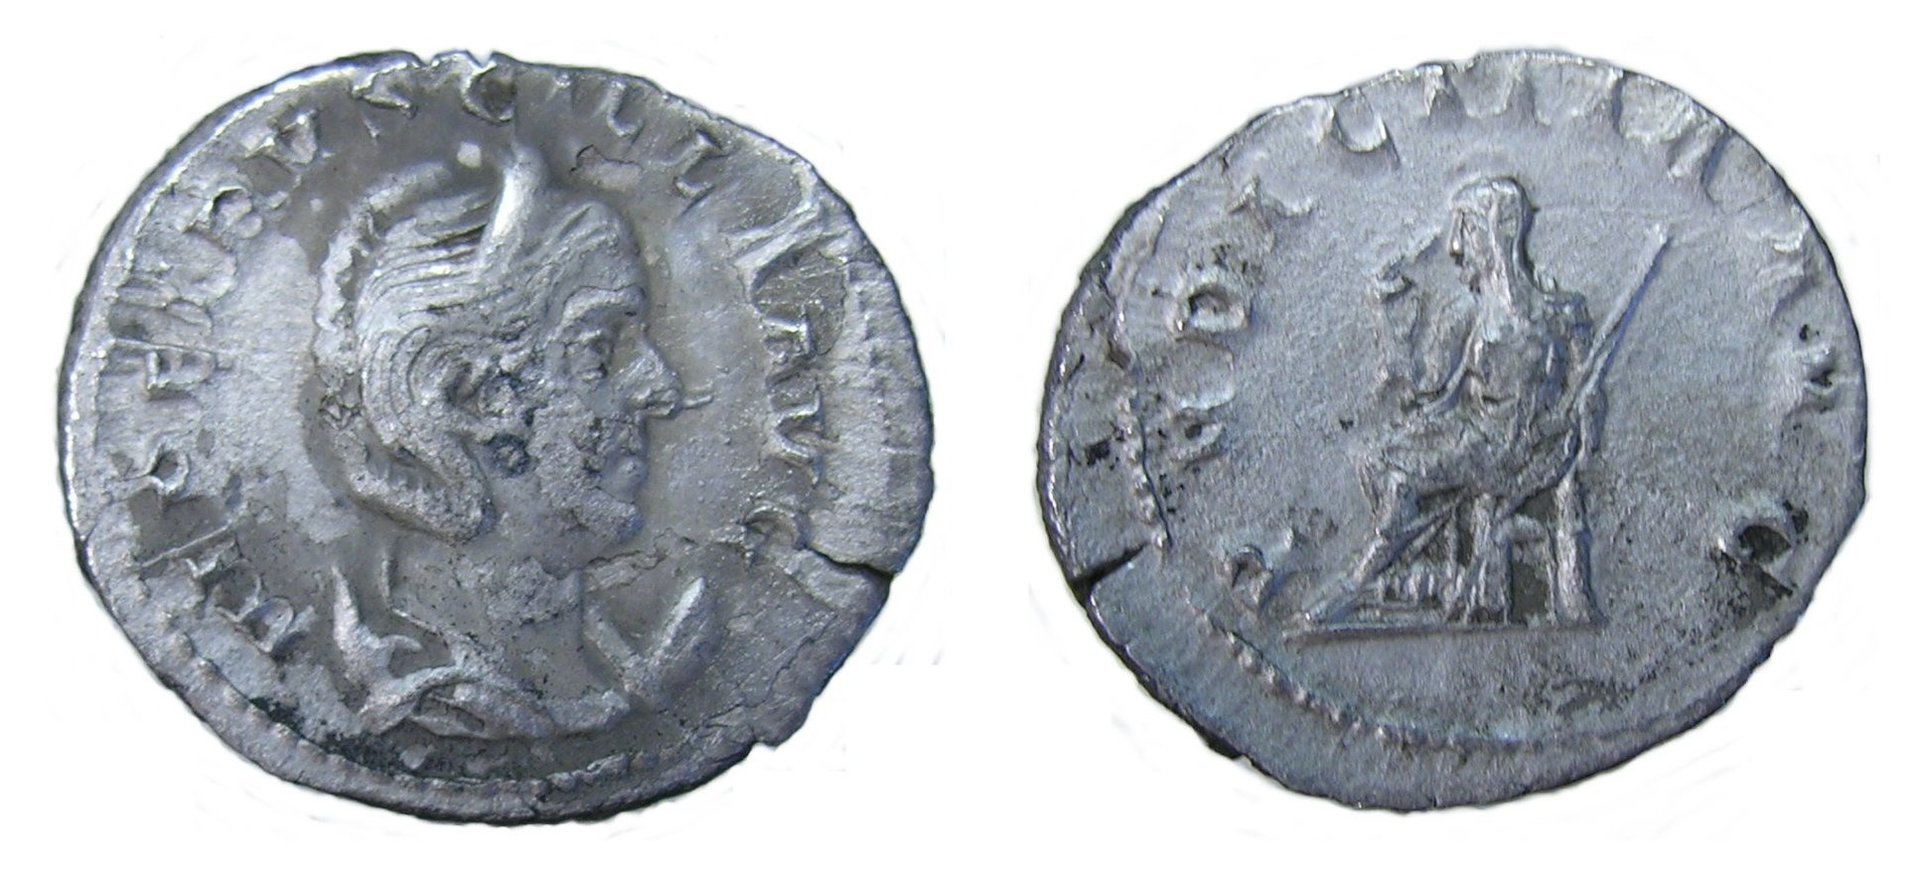 Herennia-Etruscilla-antoninianus-merged.jpg